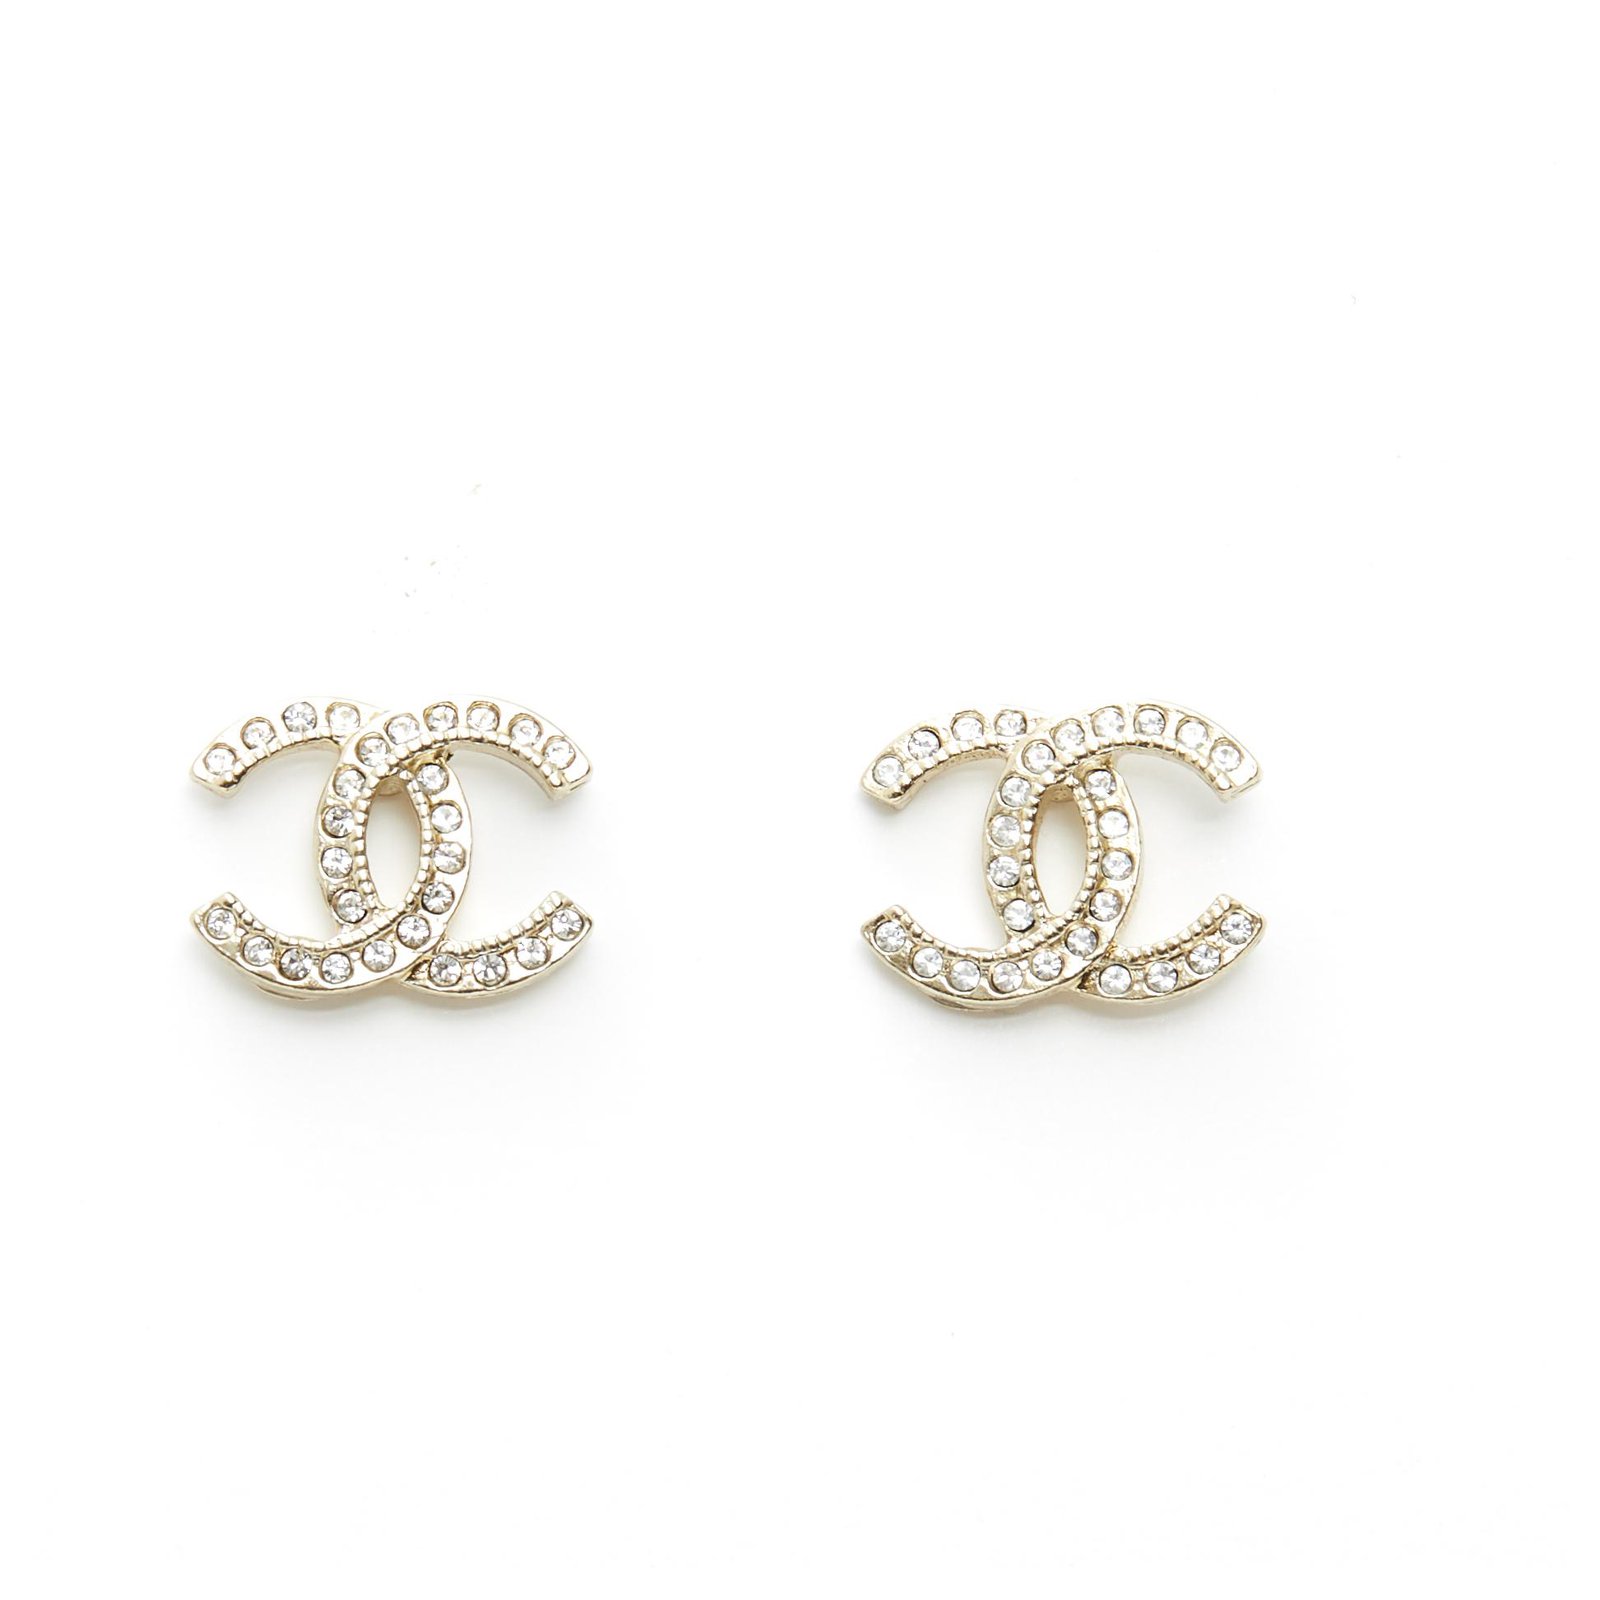 Chanel bow cc earrings - Gem